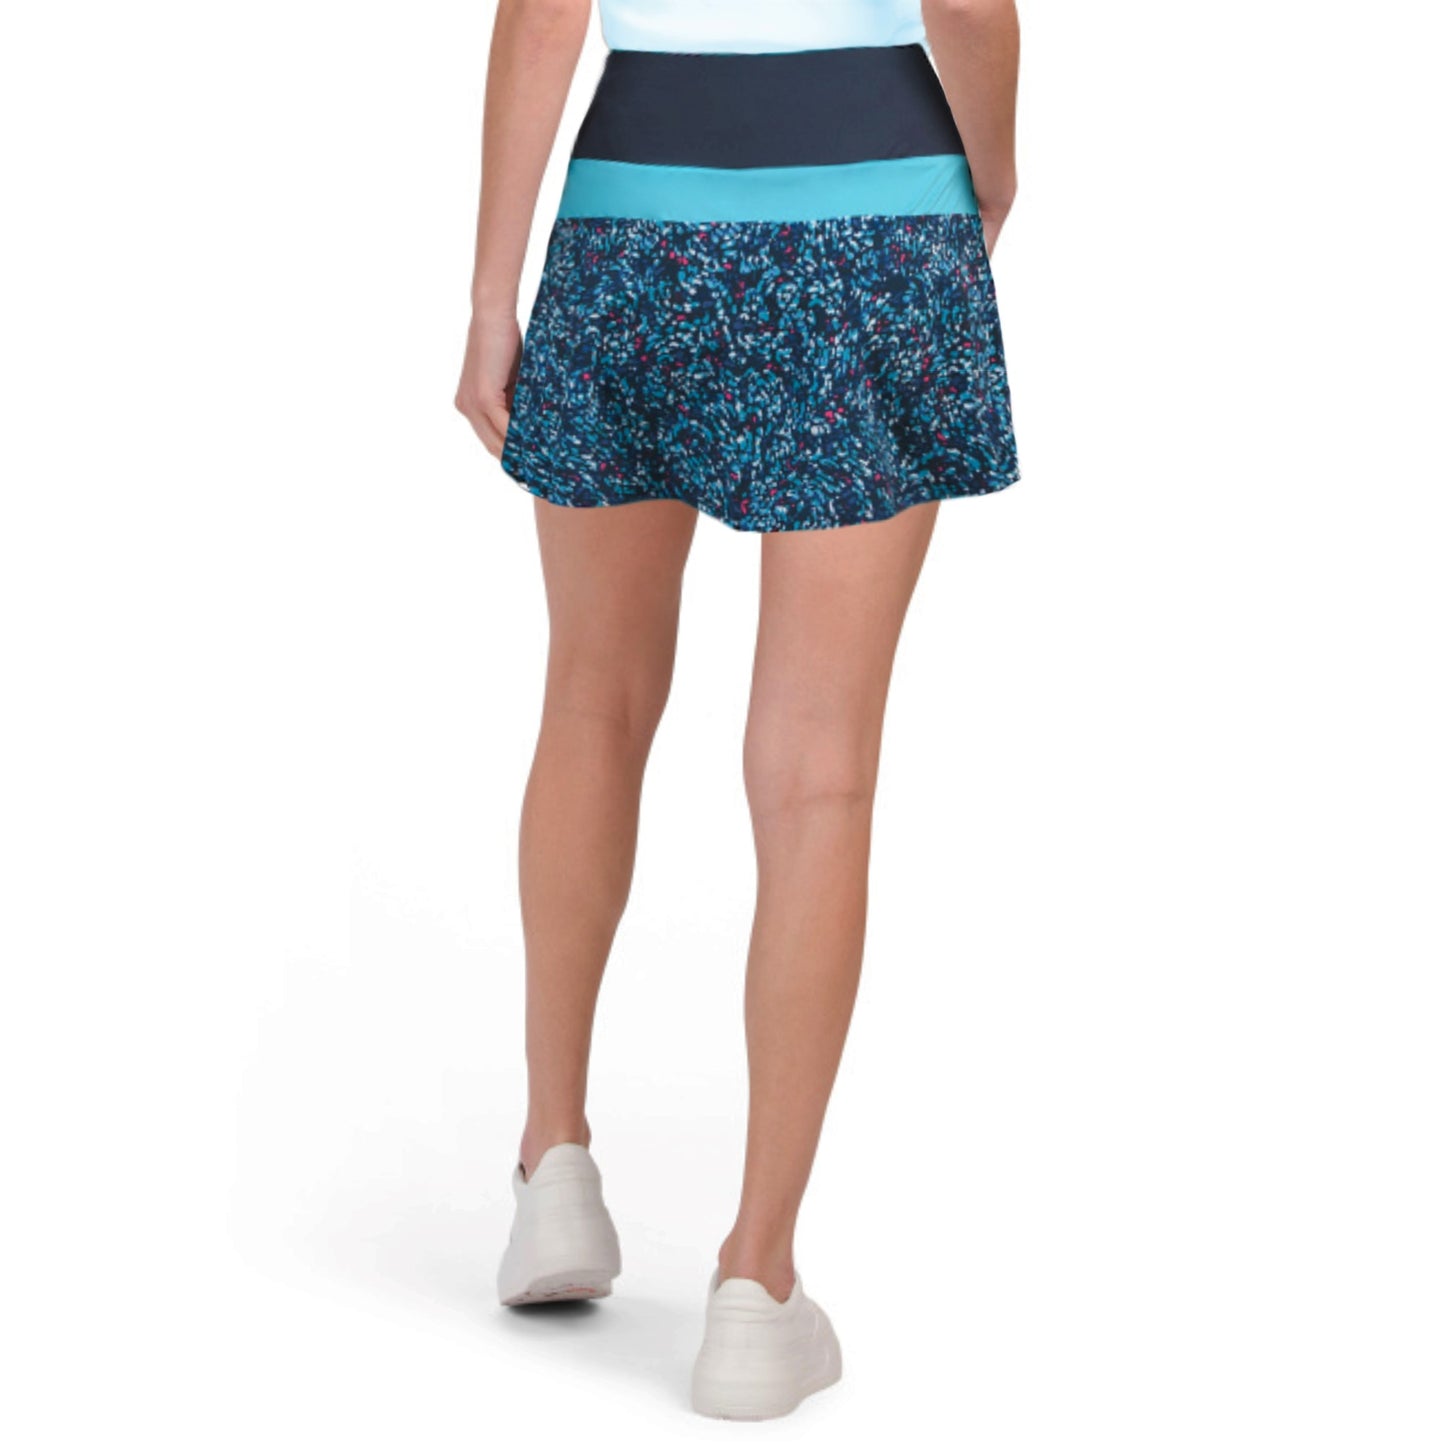 KYODAN Women's Built-in Shorts Color Block Inserts Golf Skort